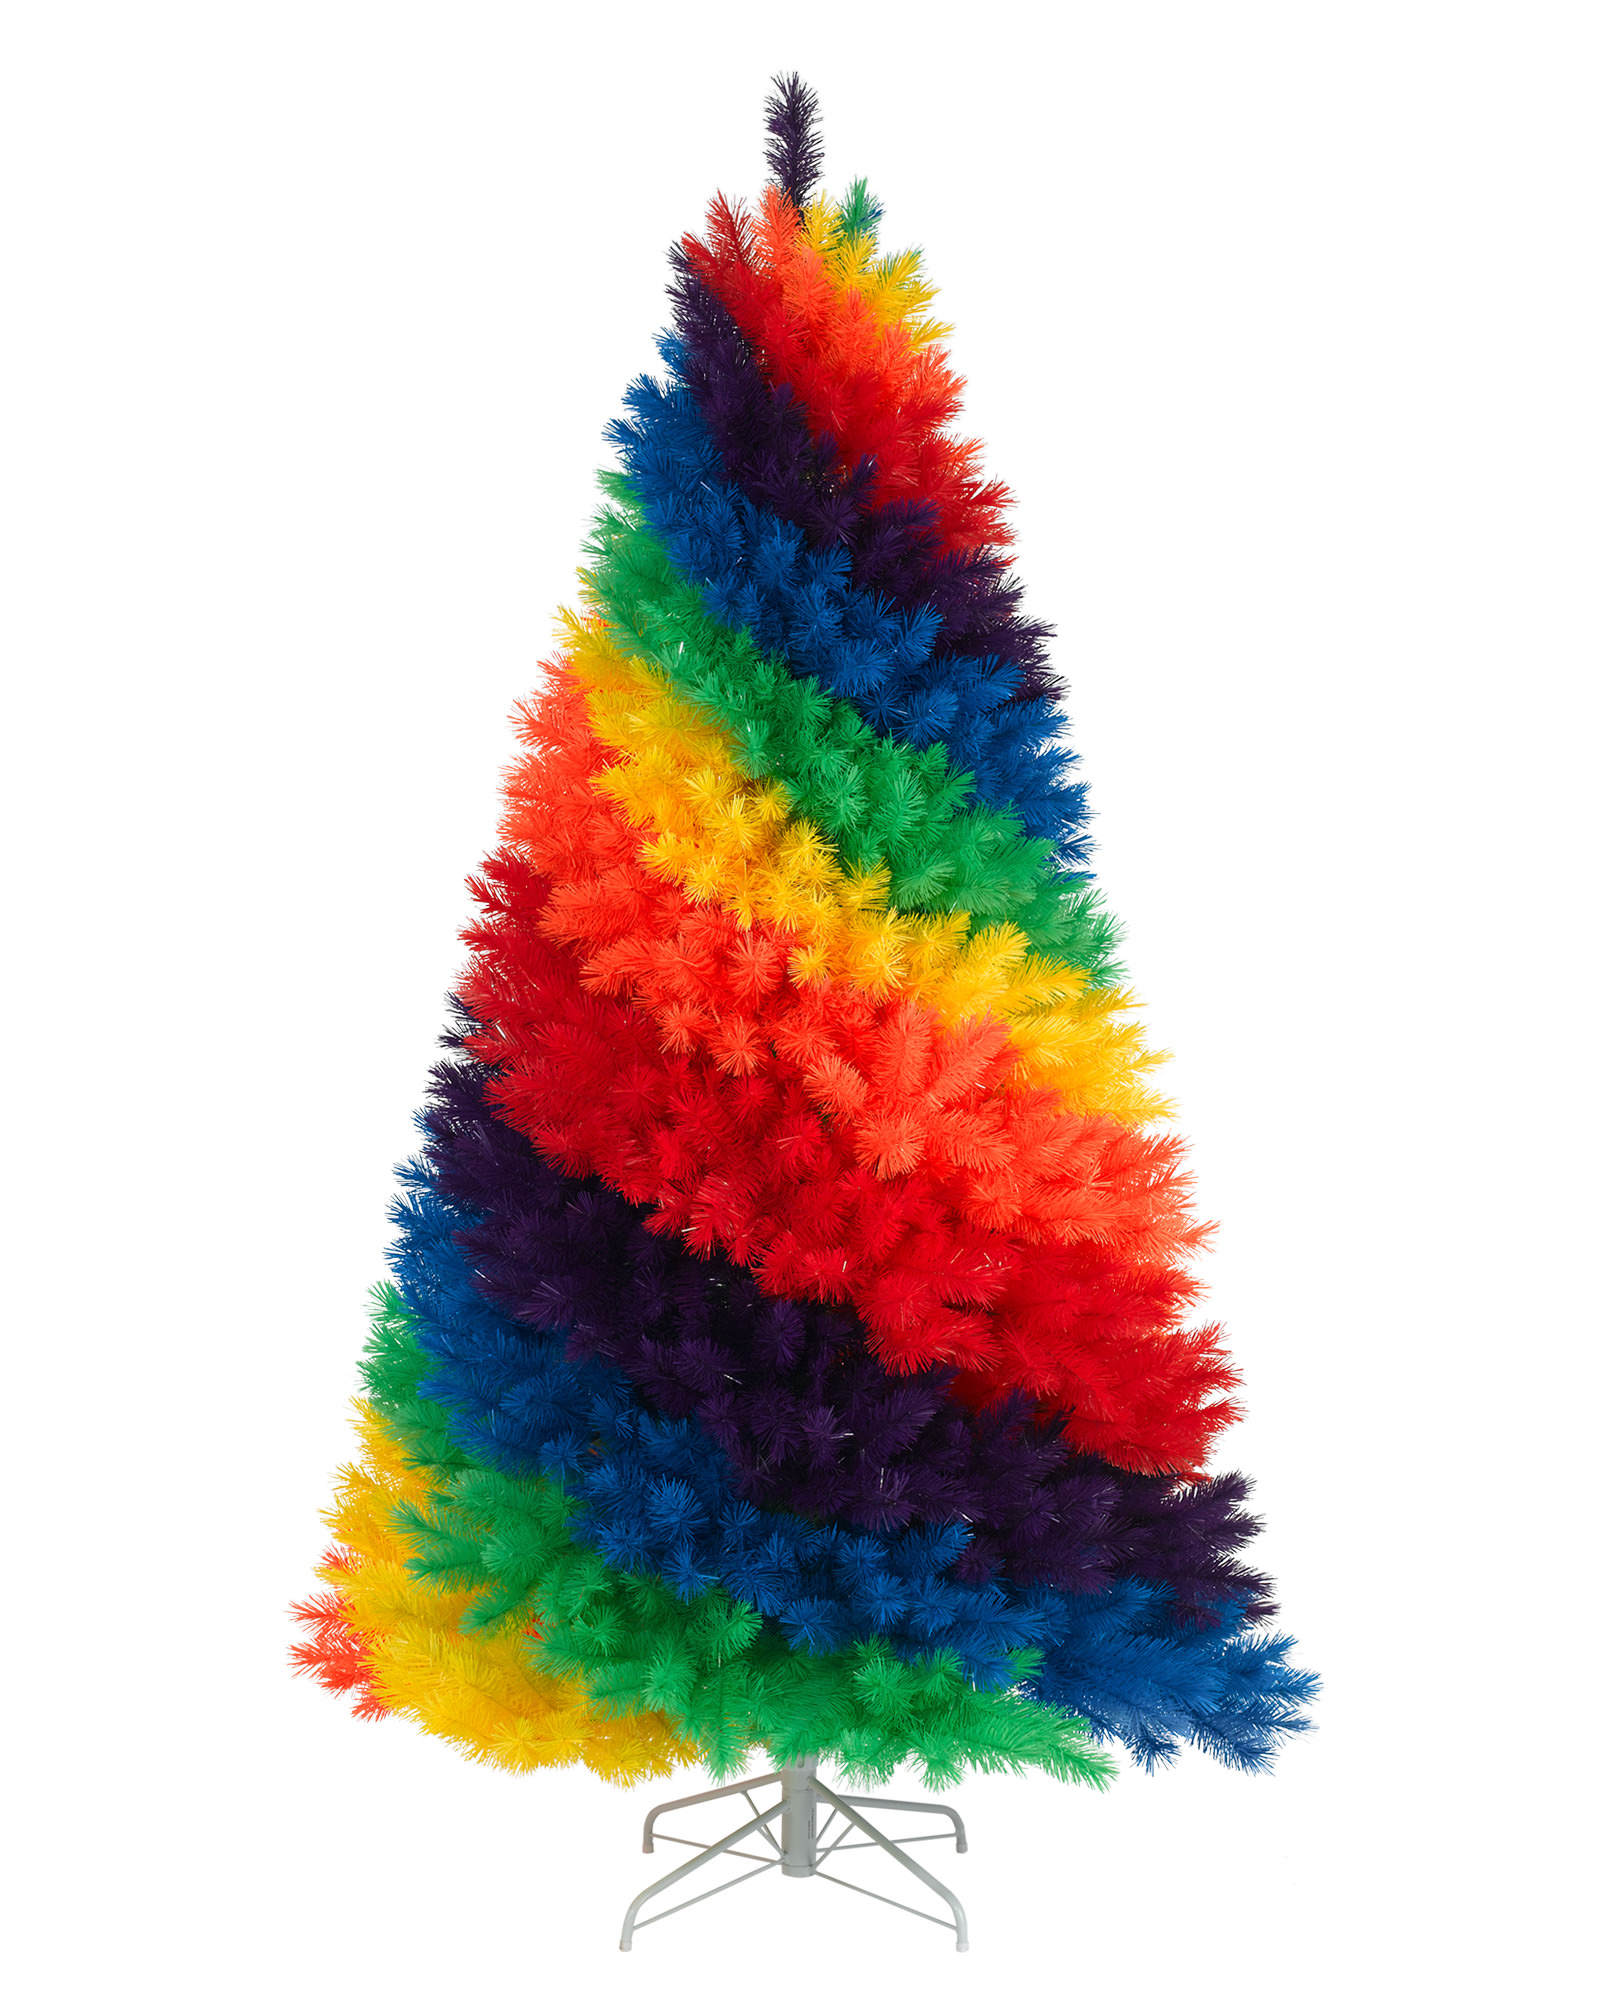 Rainbow Christmas Tree  Rainbowtree  Colorfulchristmas